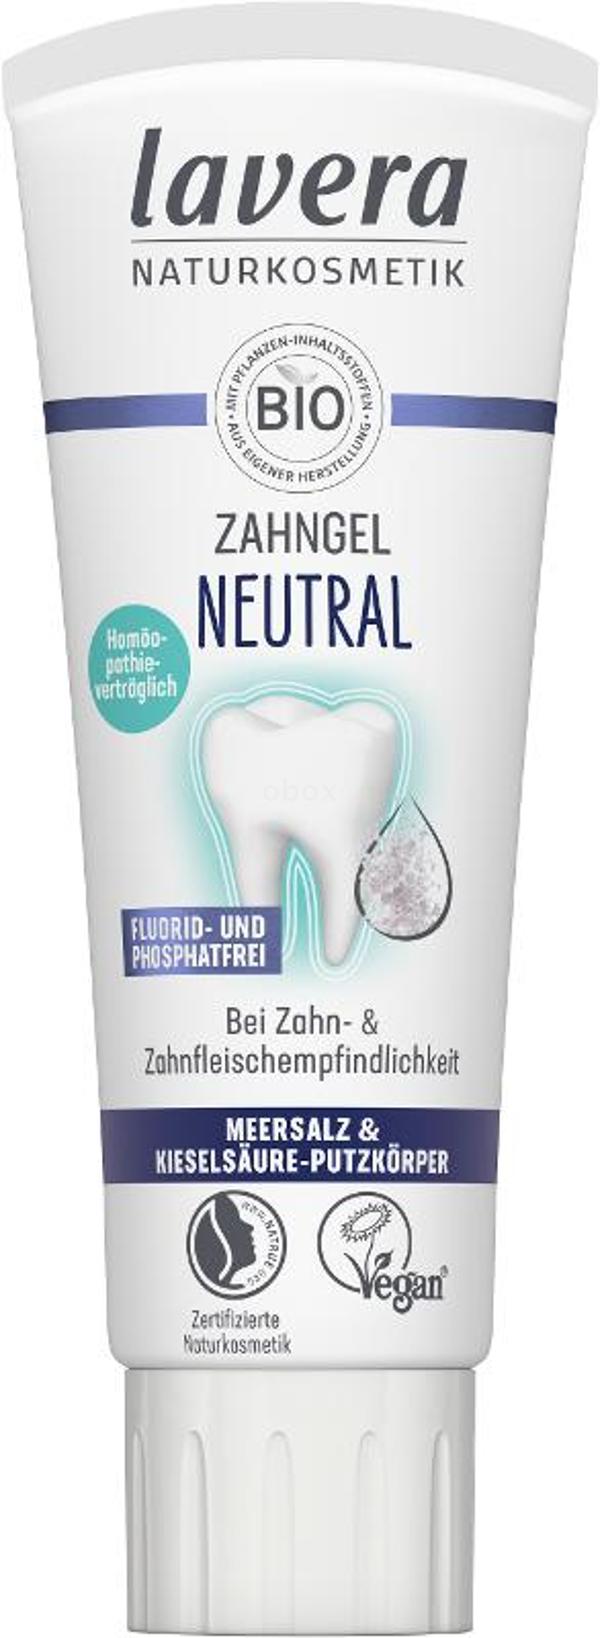 Produktfoto zu Zahngel Neutral 75ml